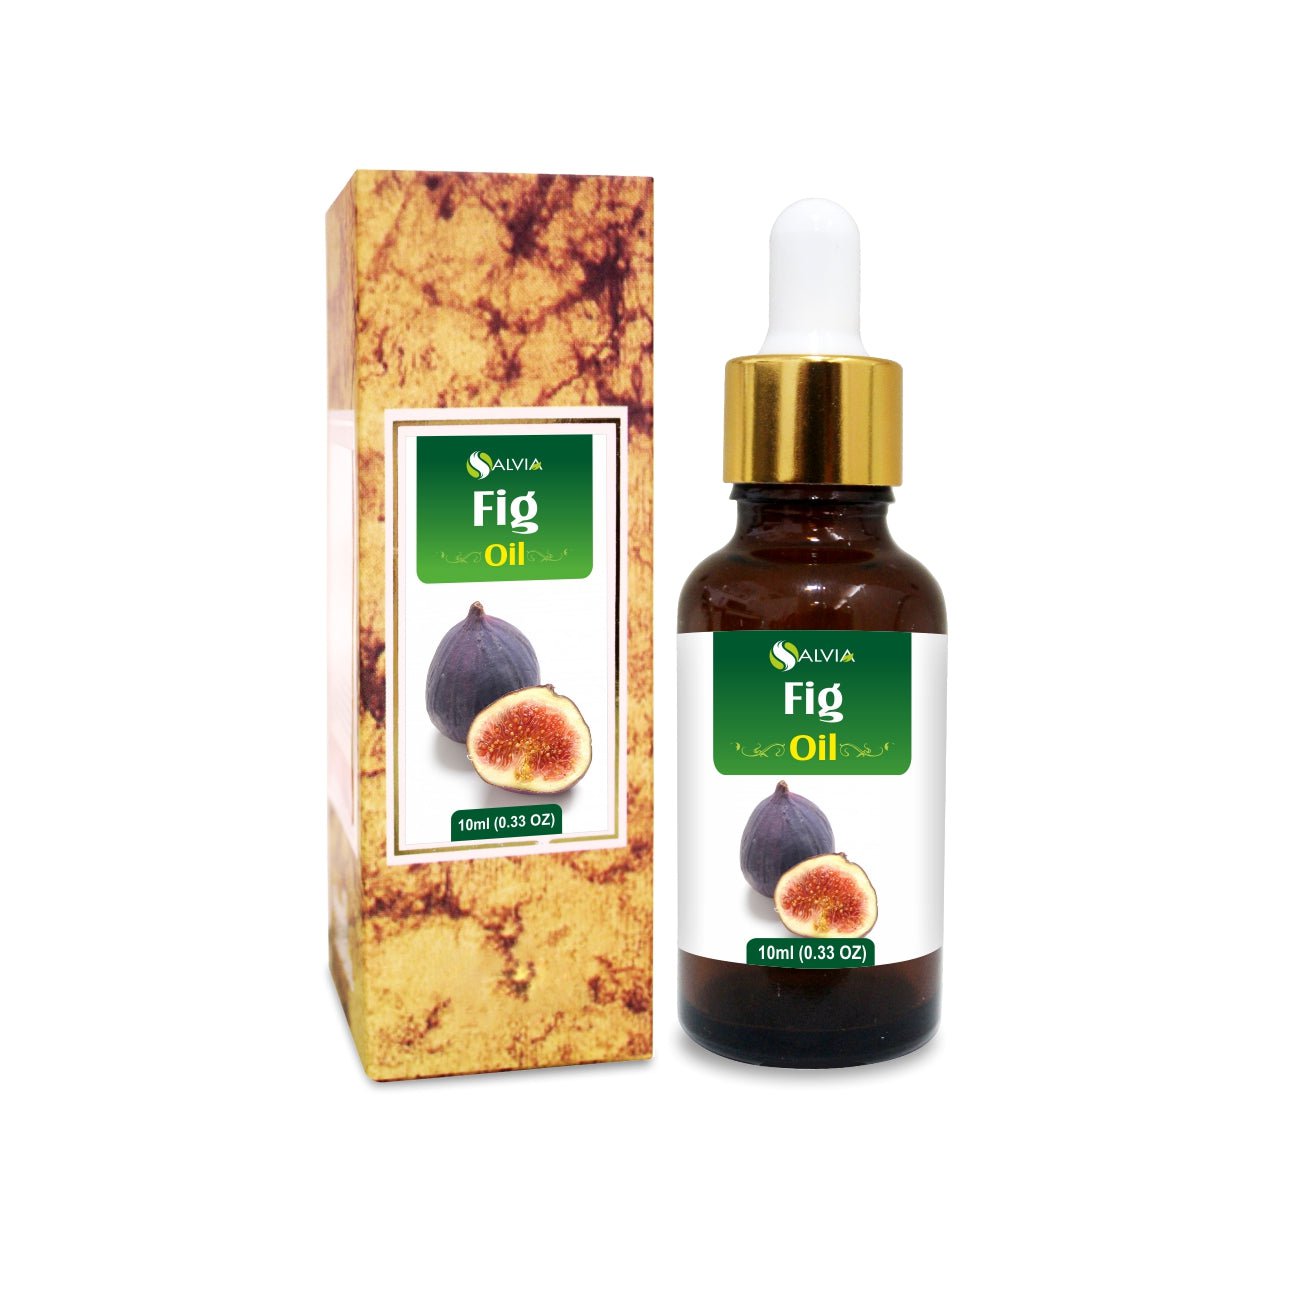 Salvia Natural Carrier Oils 10ml Fig Oil